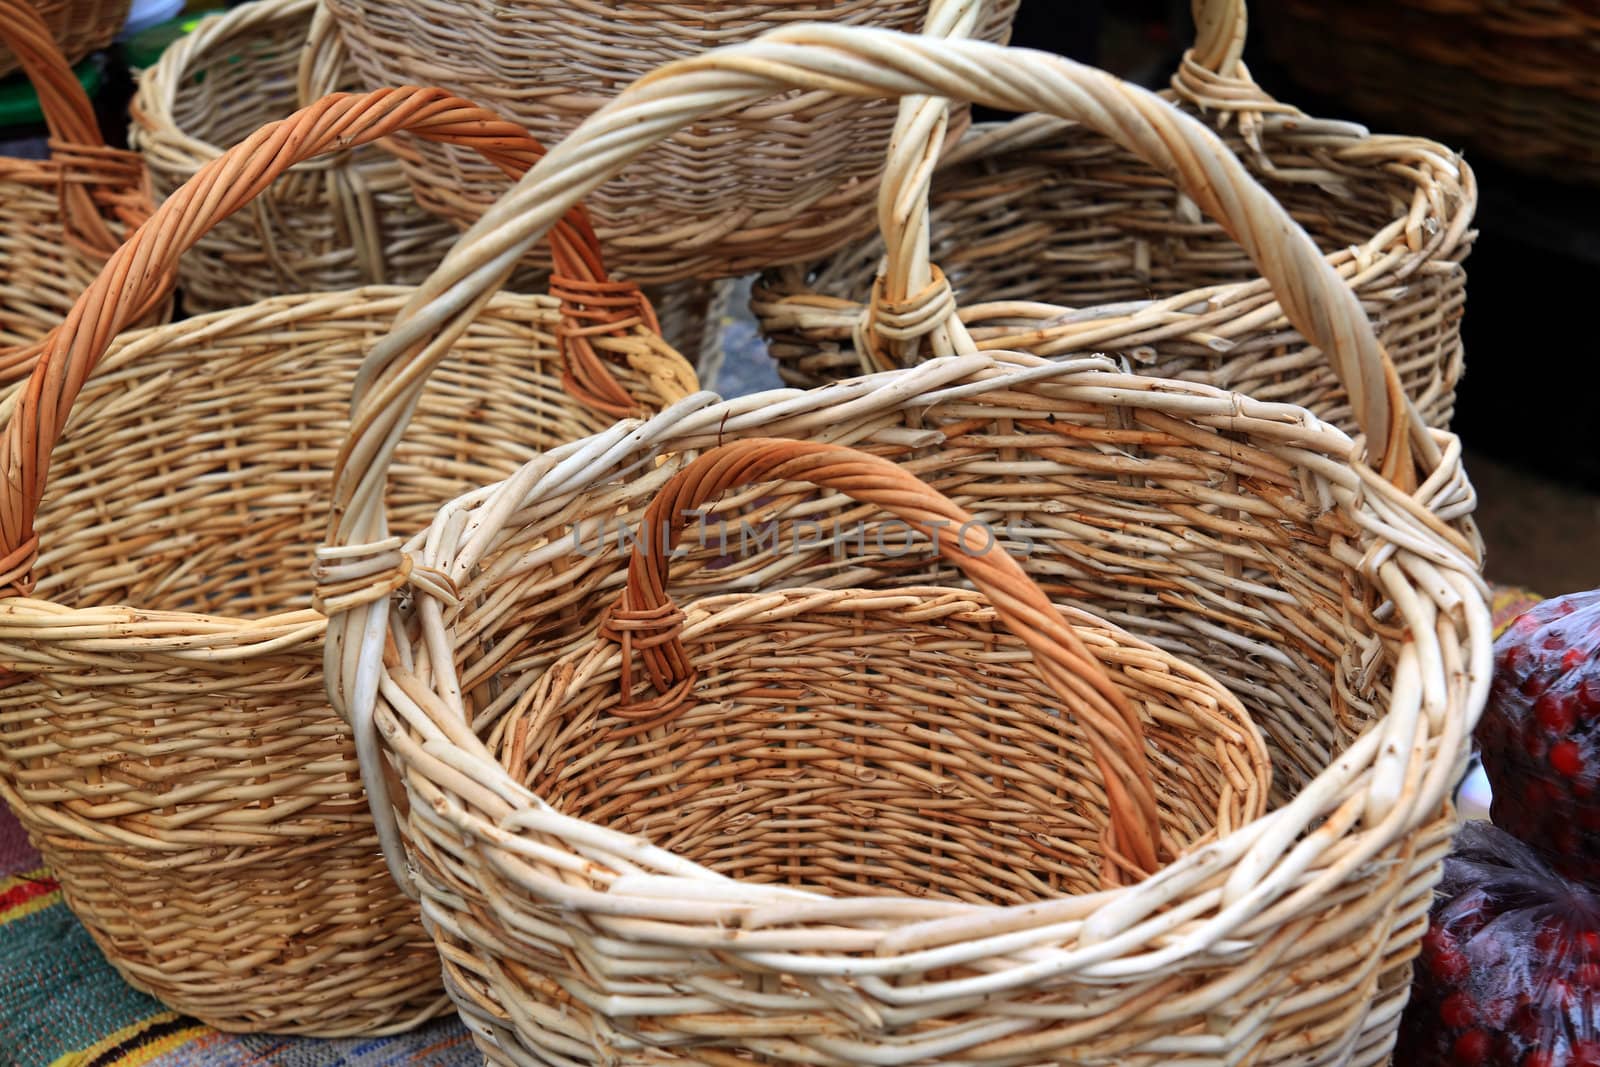 new baskets on rural market